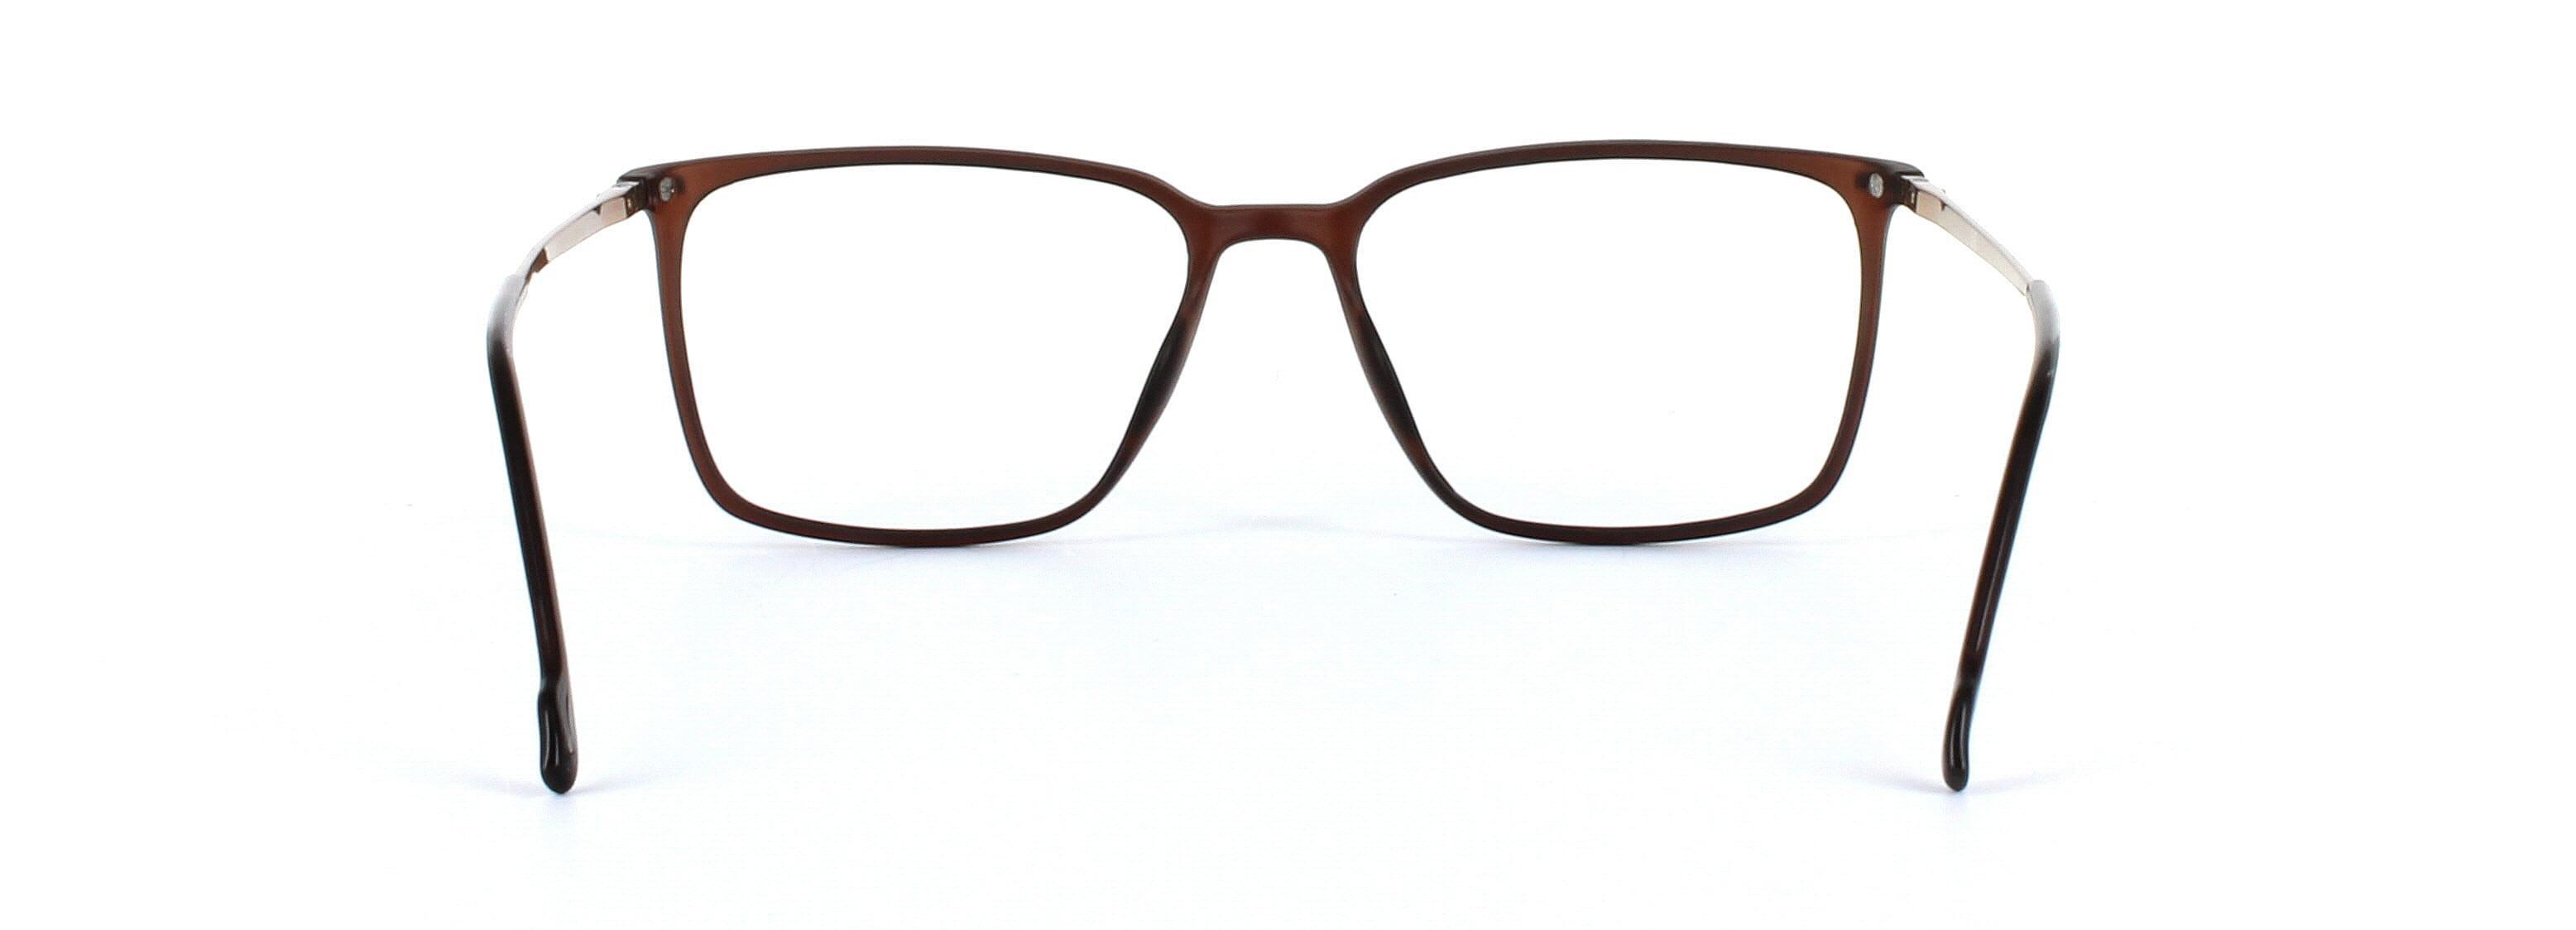 Nebraska Brown Full Rim Plastic Glasses - Image View 3